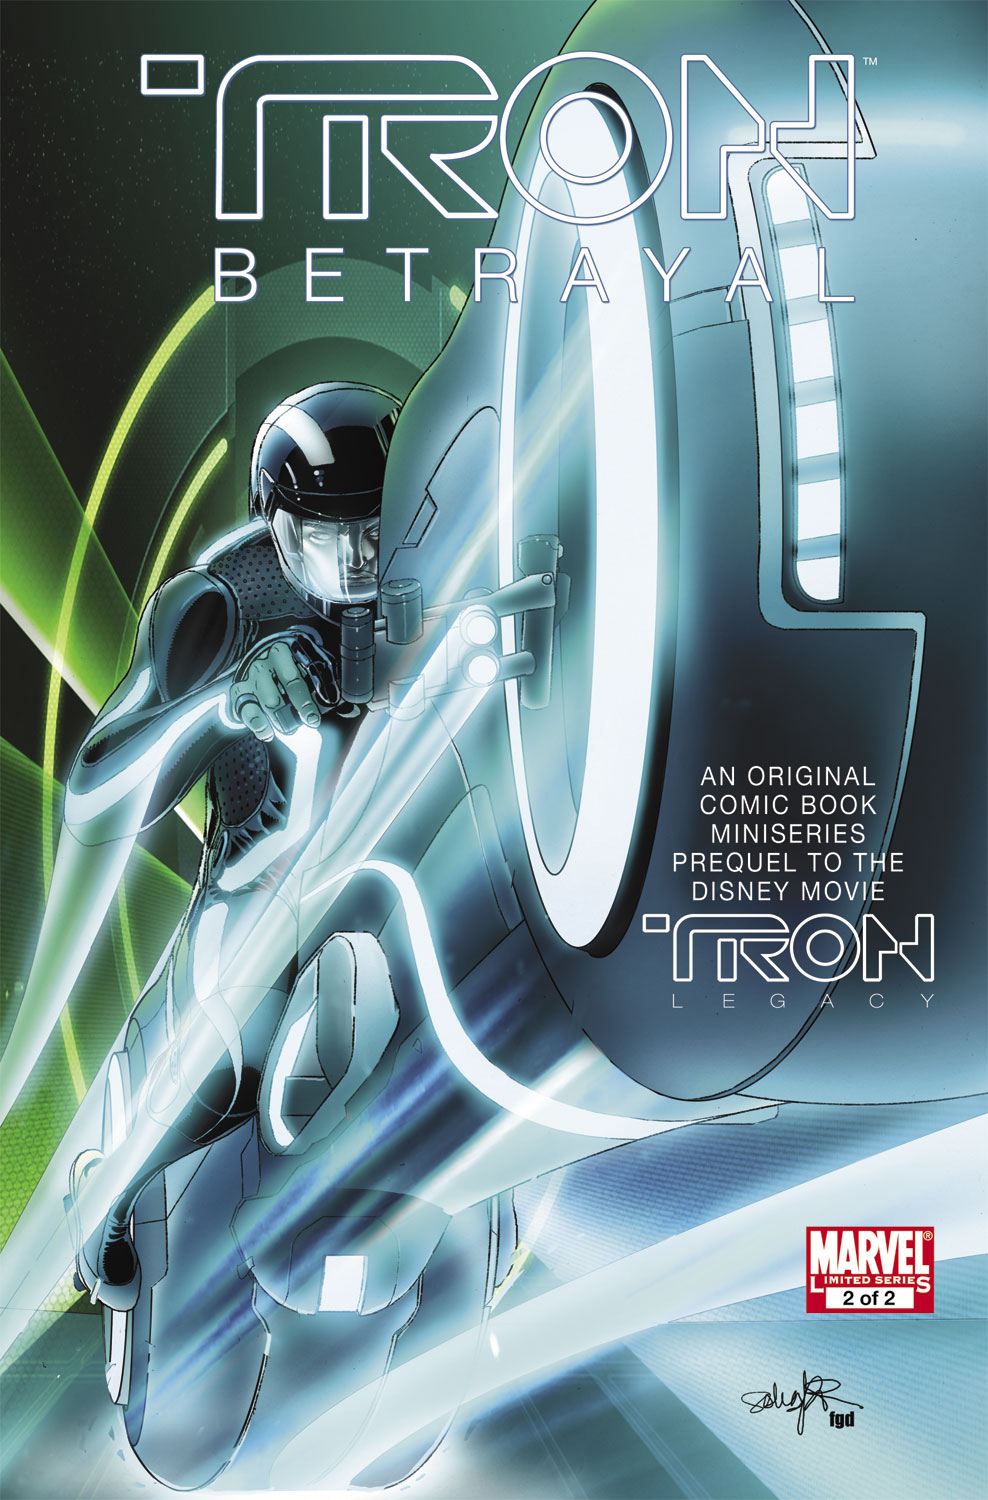 Tron: Betrayal (2010) #2